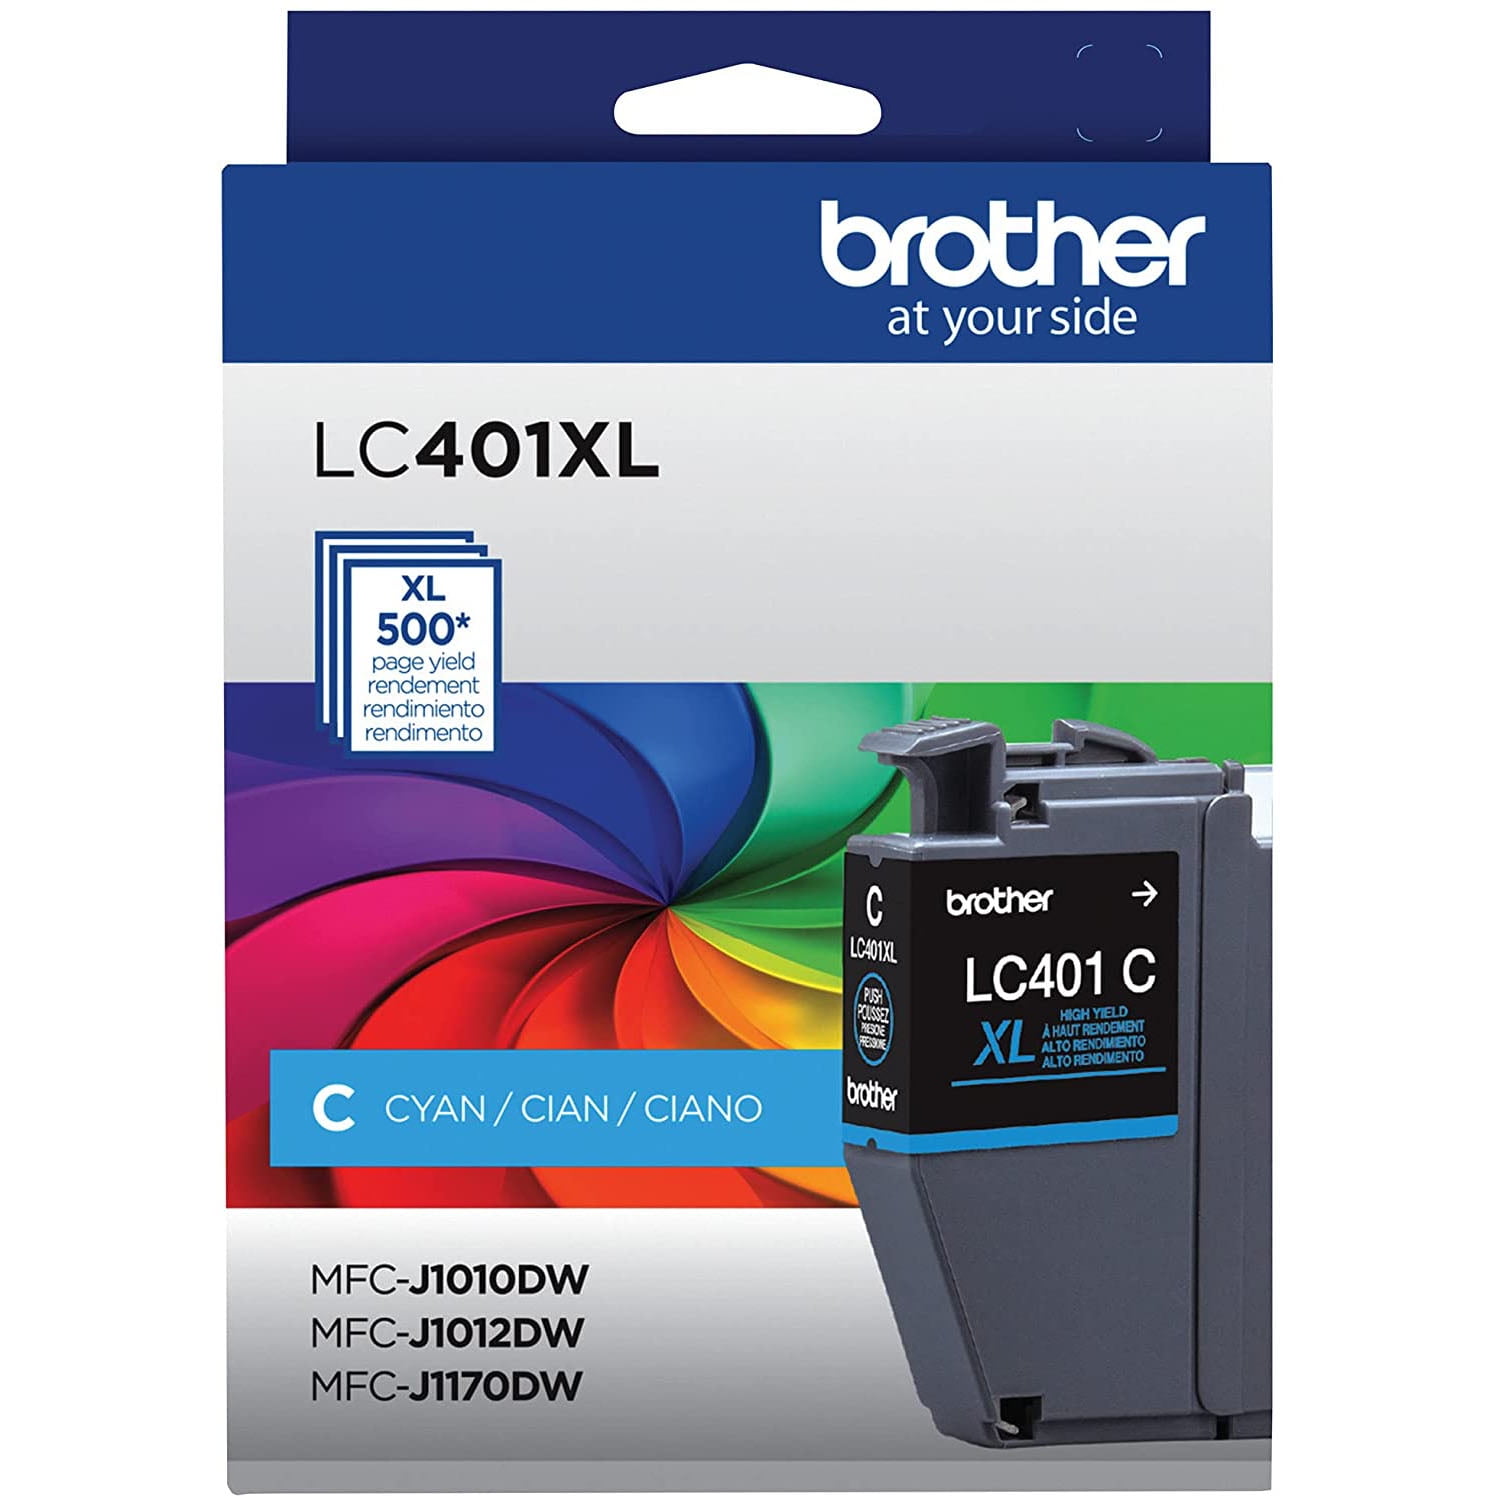 Brother Genuine LC401XLCS High Yield Cyan Printer Ink Cartridge